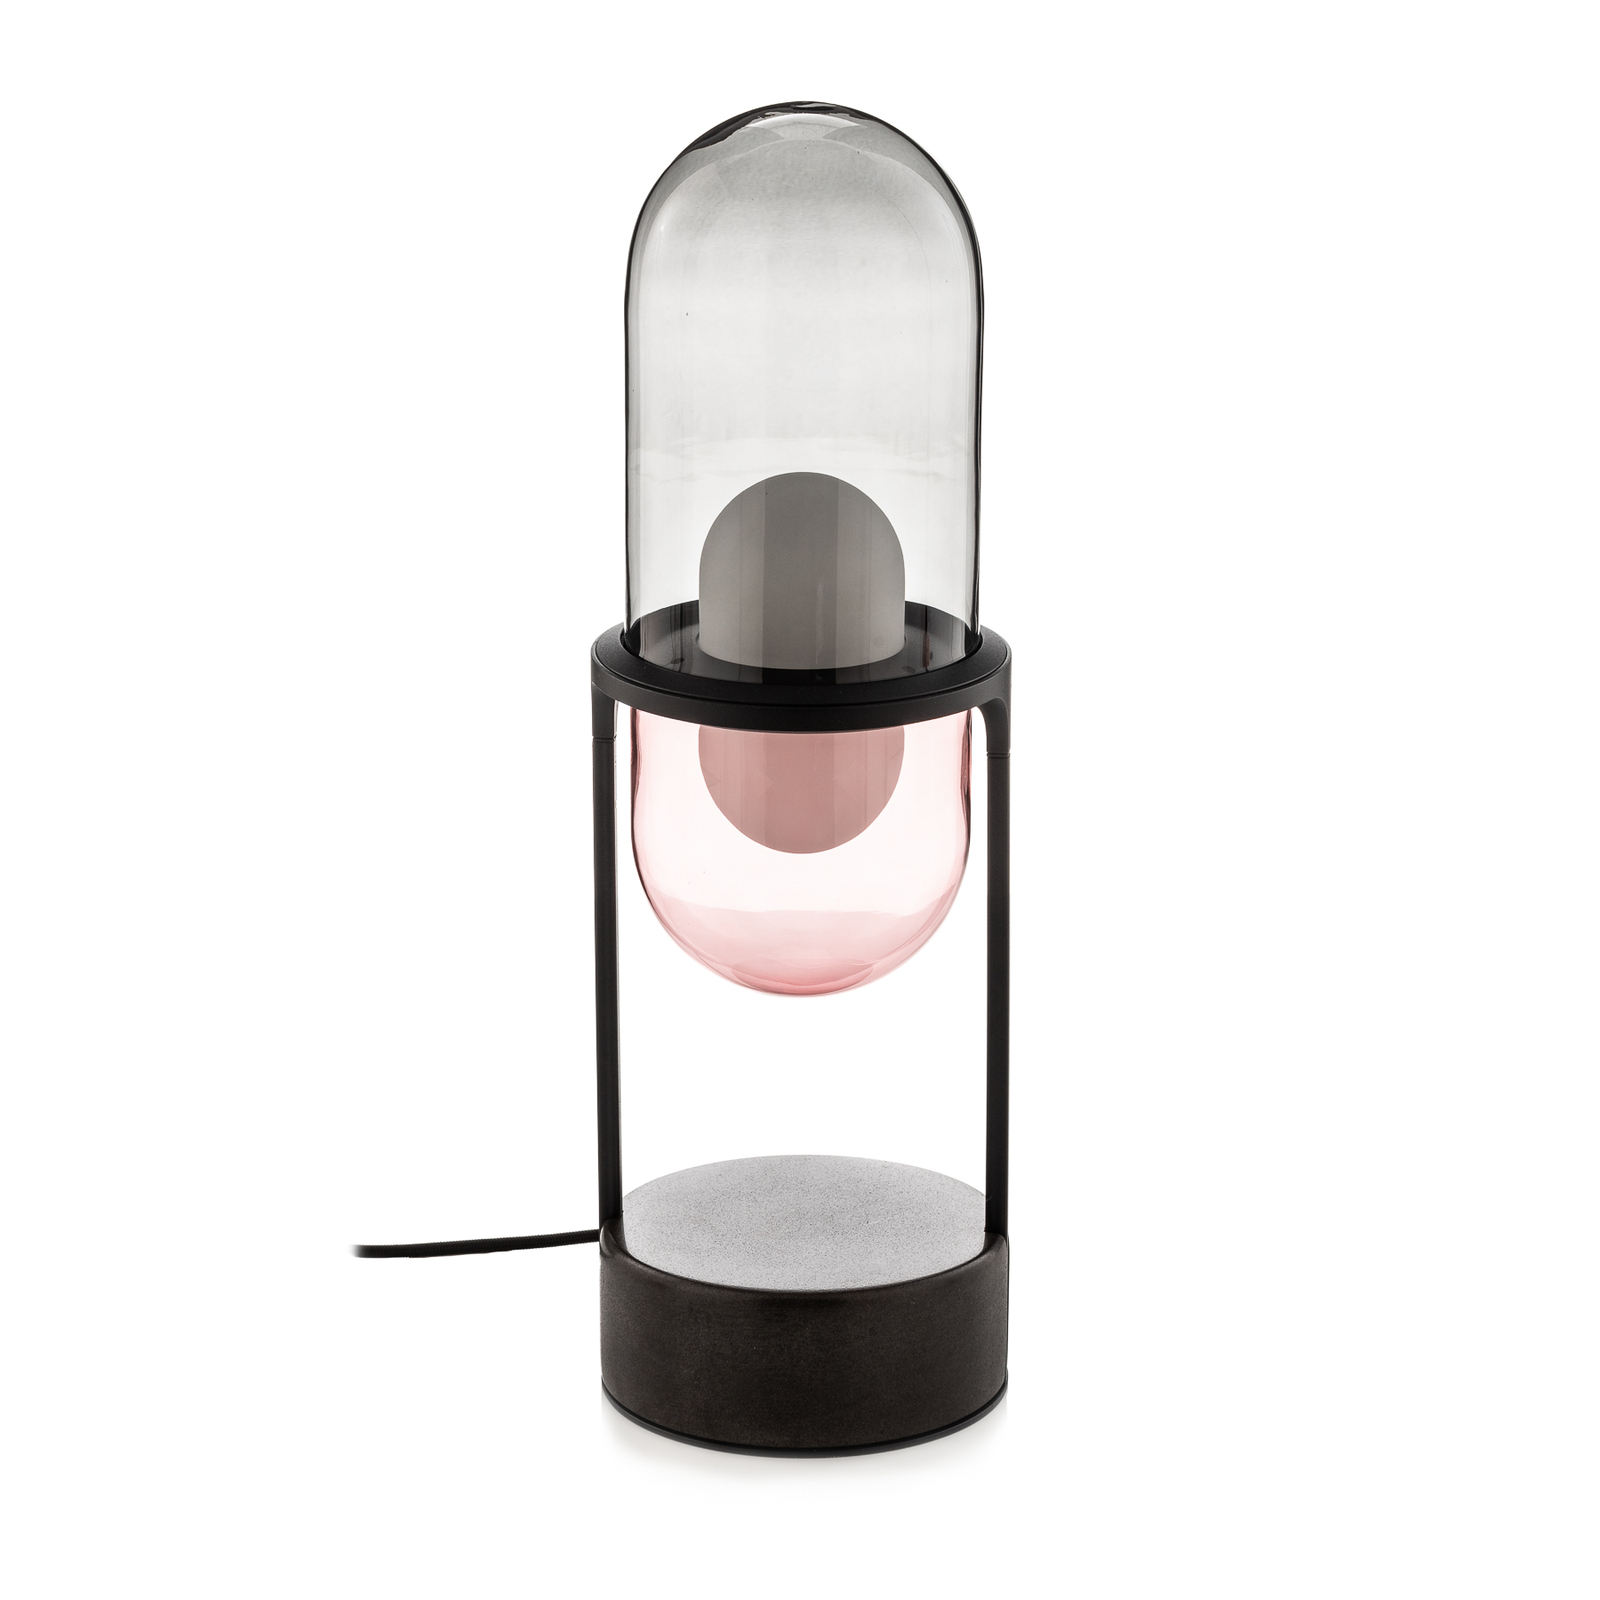 Pille lampada LED da tavolo grigio/pink